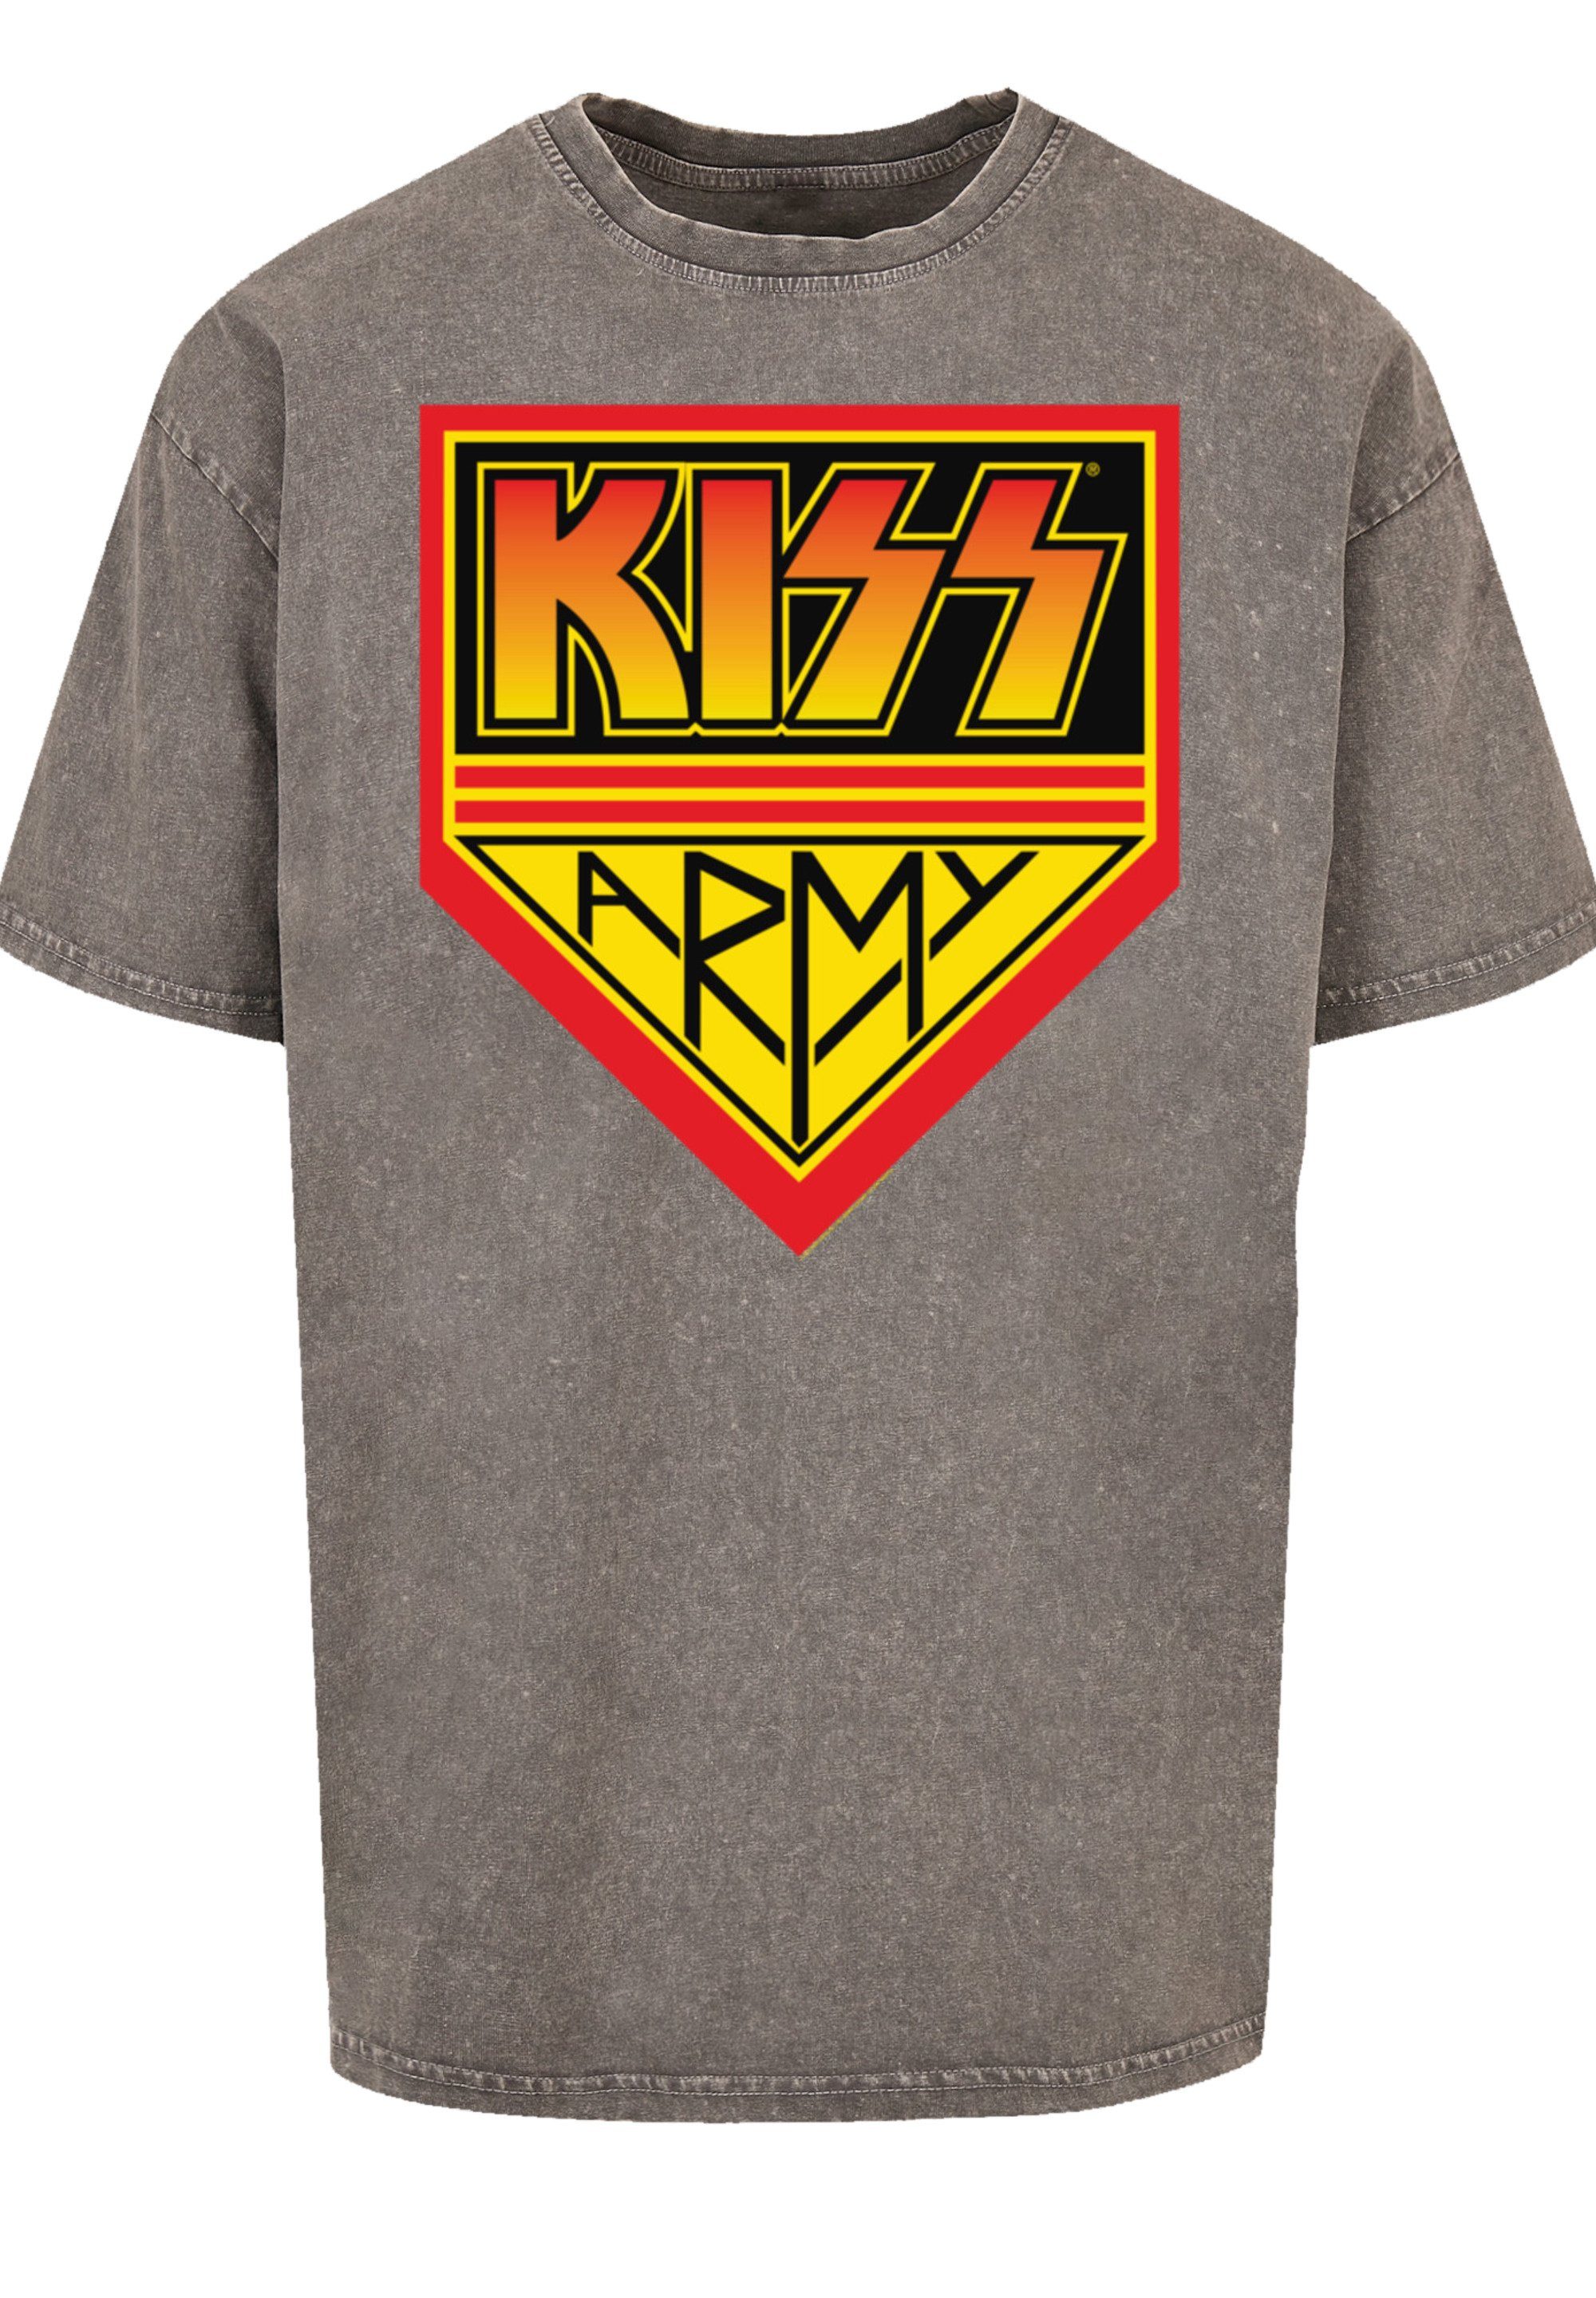 T-Shirt Asphalt Musik, Rock Army Qualität, Logo By Kiss Premium Band F4NT4STIC Rock Off